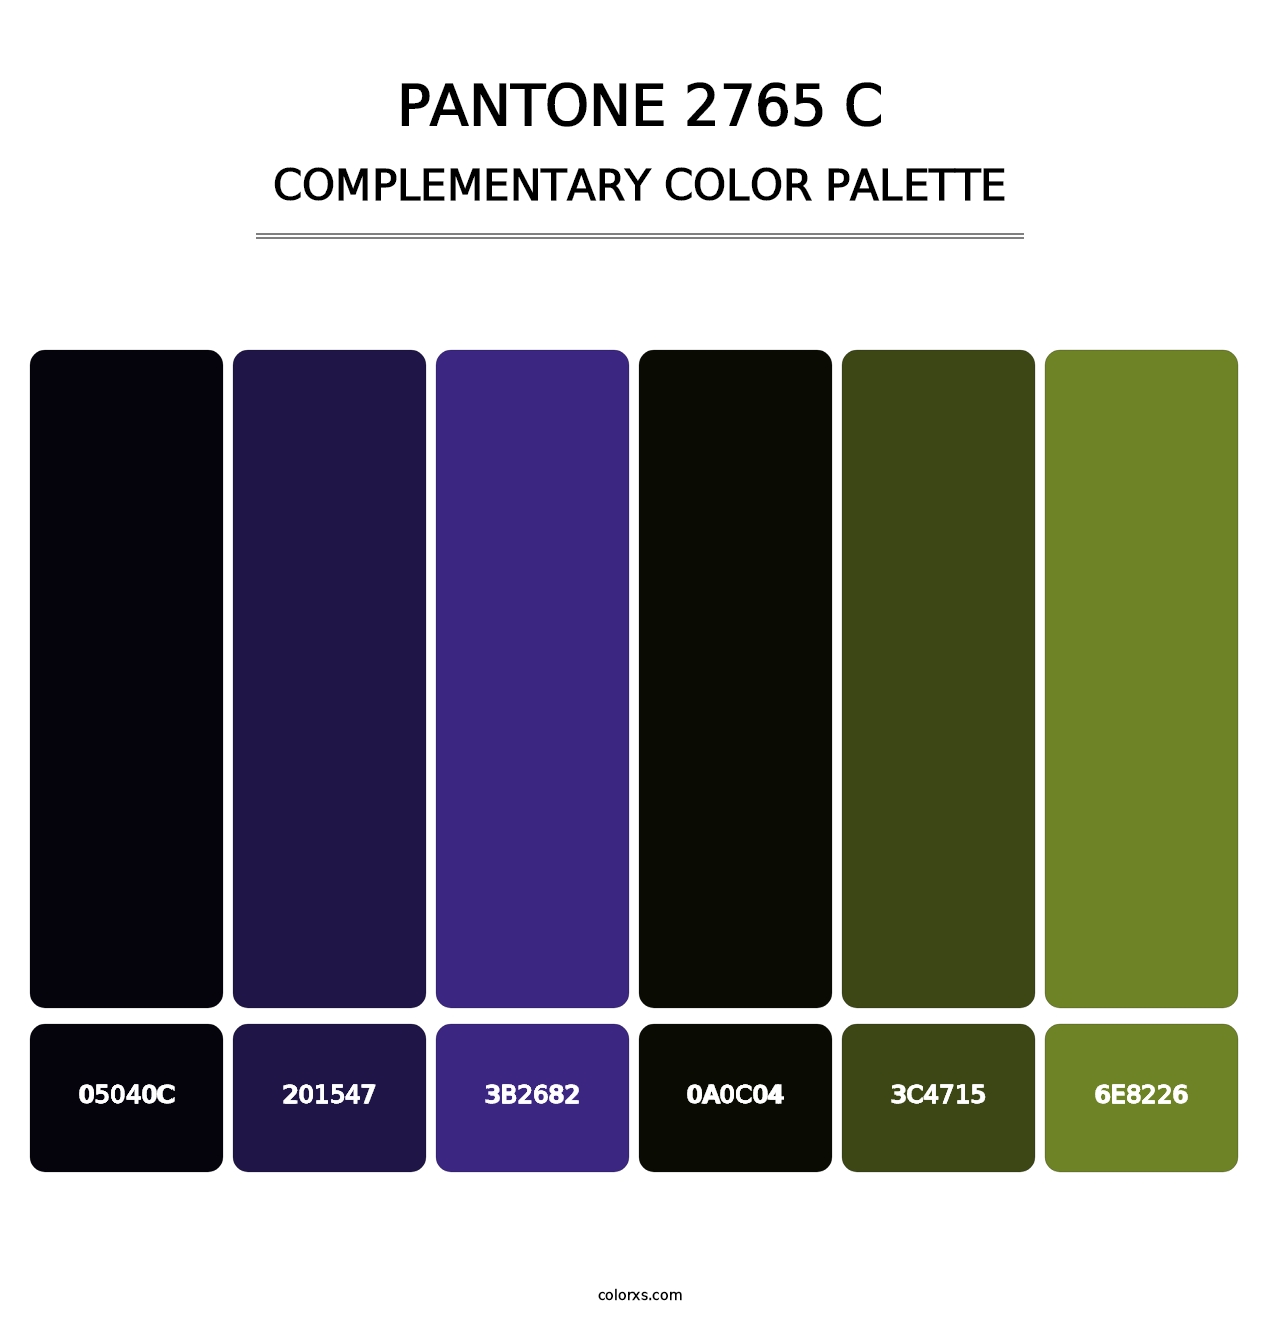 PANTONE 2765 C - Complementary Color Palette